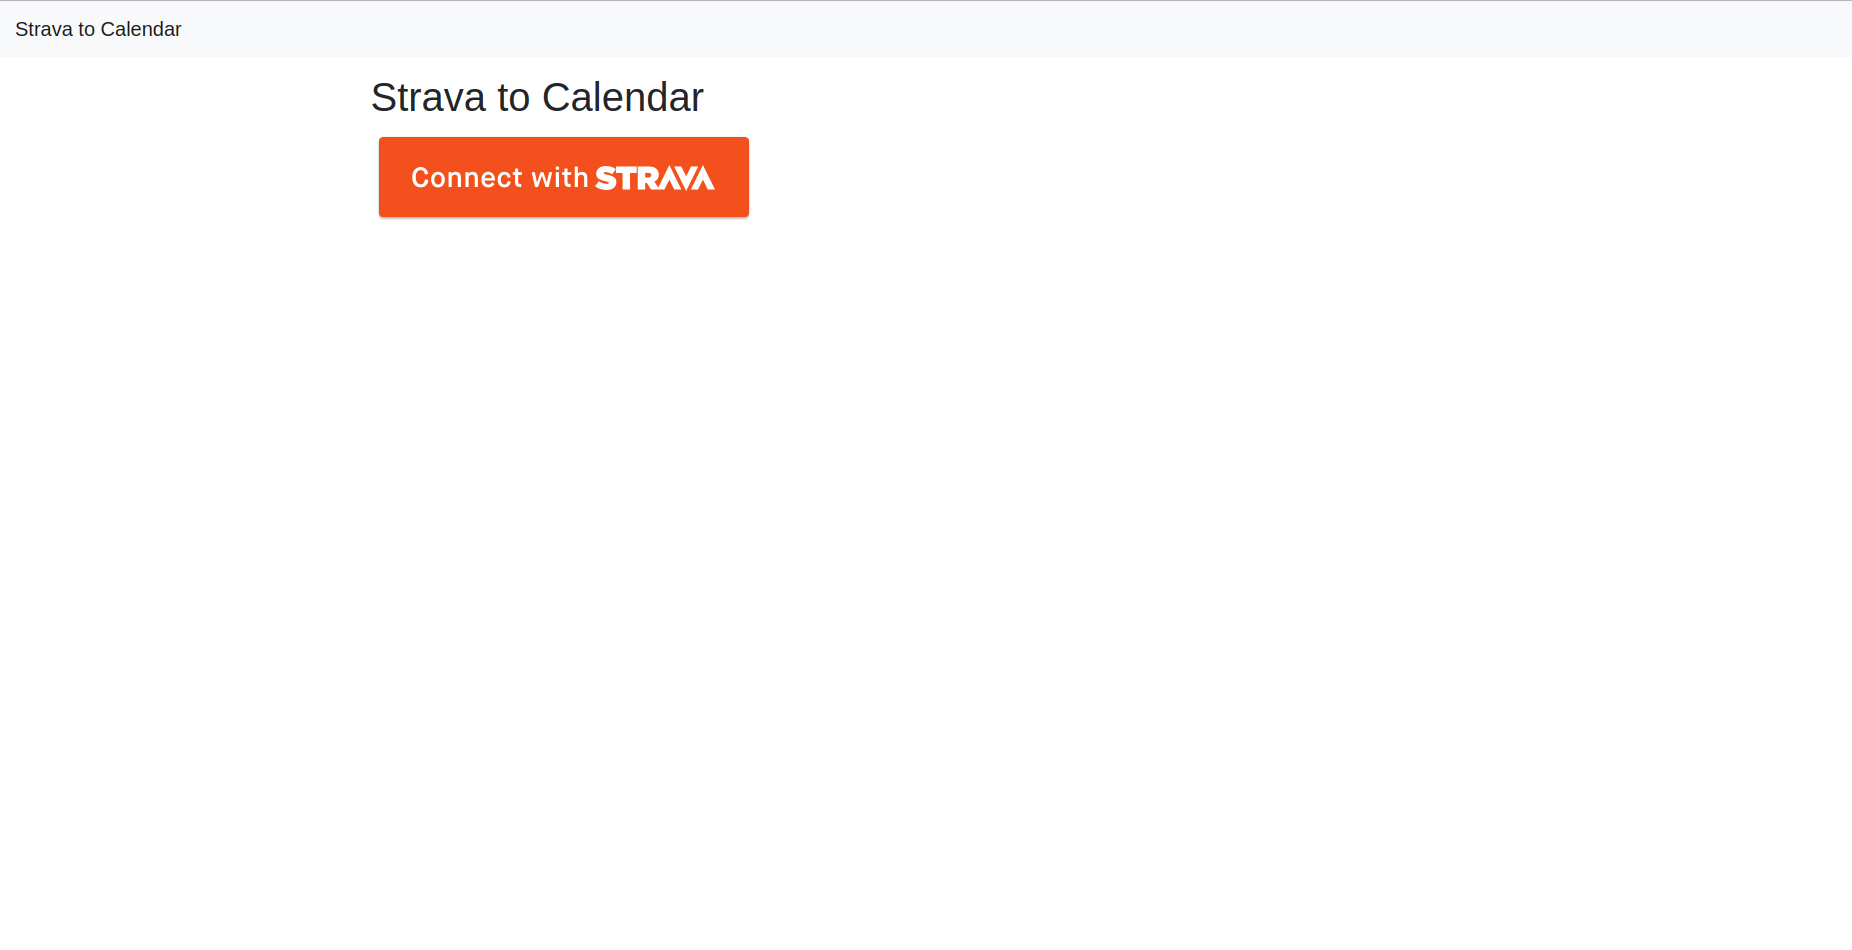 Strava to Calendar Homepage